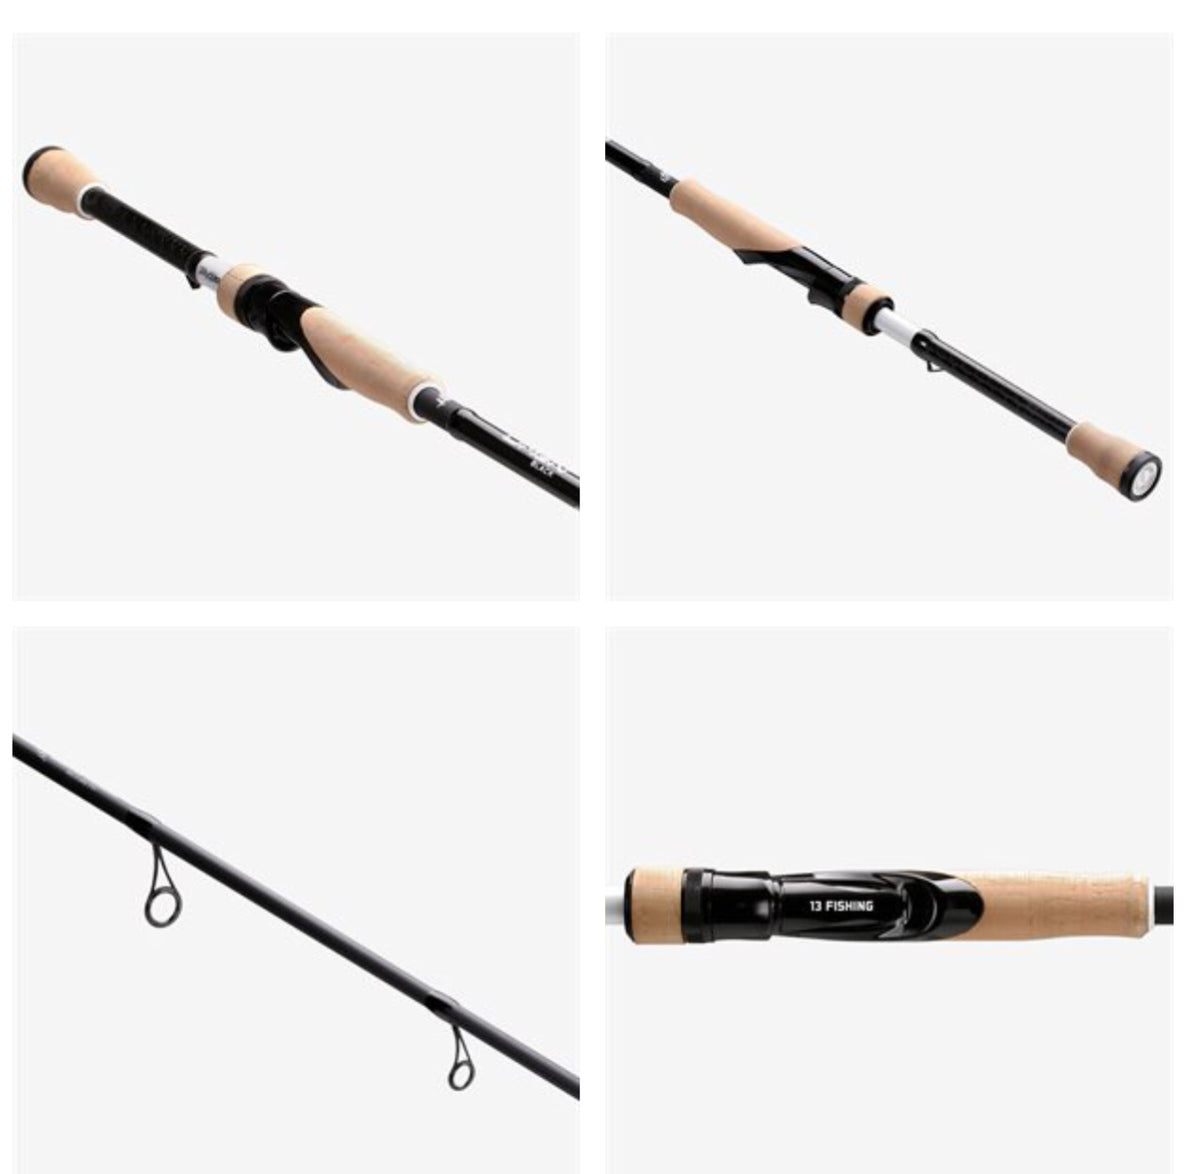 13 FISHING - Omen Ice Rod - 30 ML (Medium Light) - Solid Carbon Blank -  Split Grip Handle - OBI-30ML-SG, Rods -  Canada